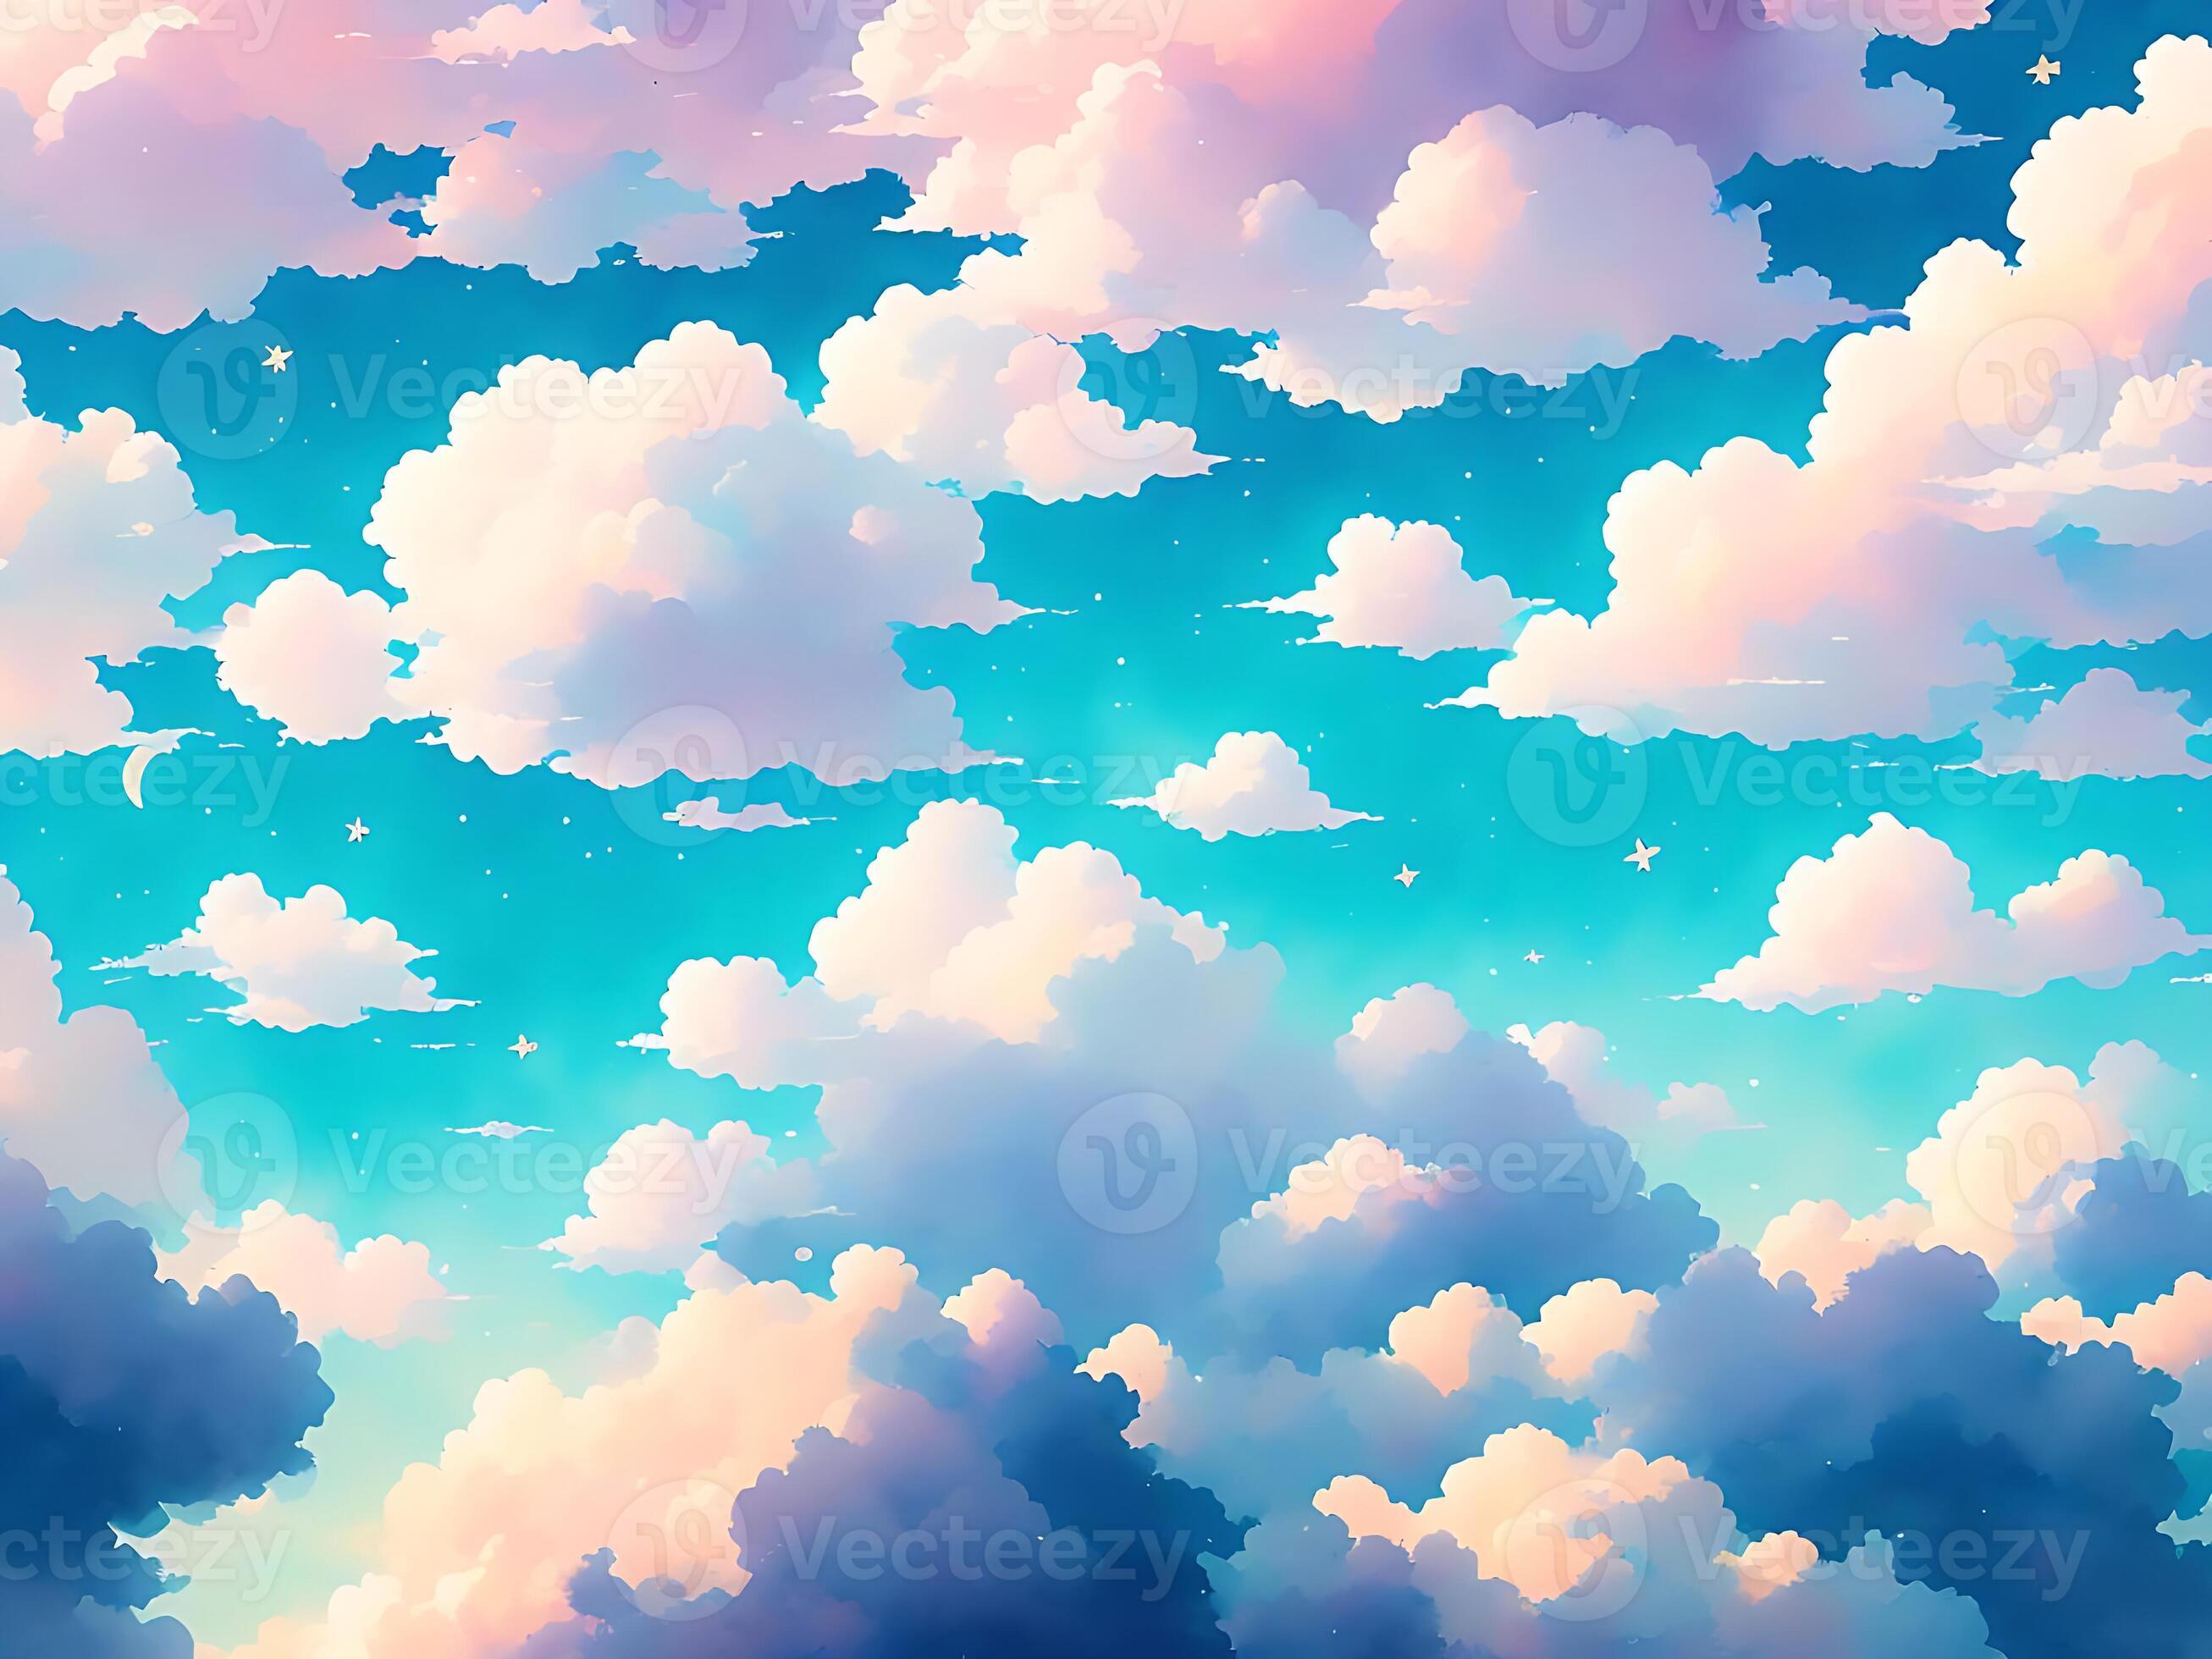 Anime Cloud Wallpapers - Top Free Anime Cloud Backgrounds - WallpaperAccess  | Clouds, Sky art, Cloud wallpaper